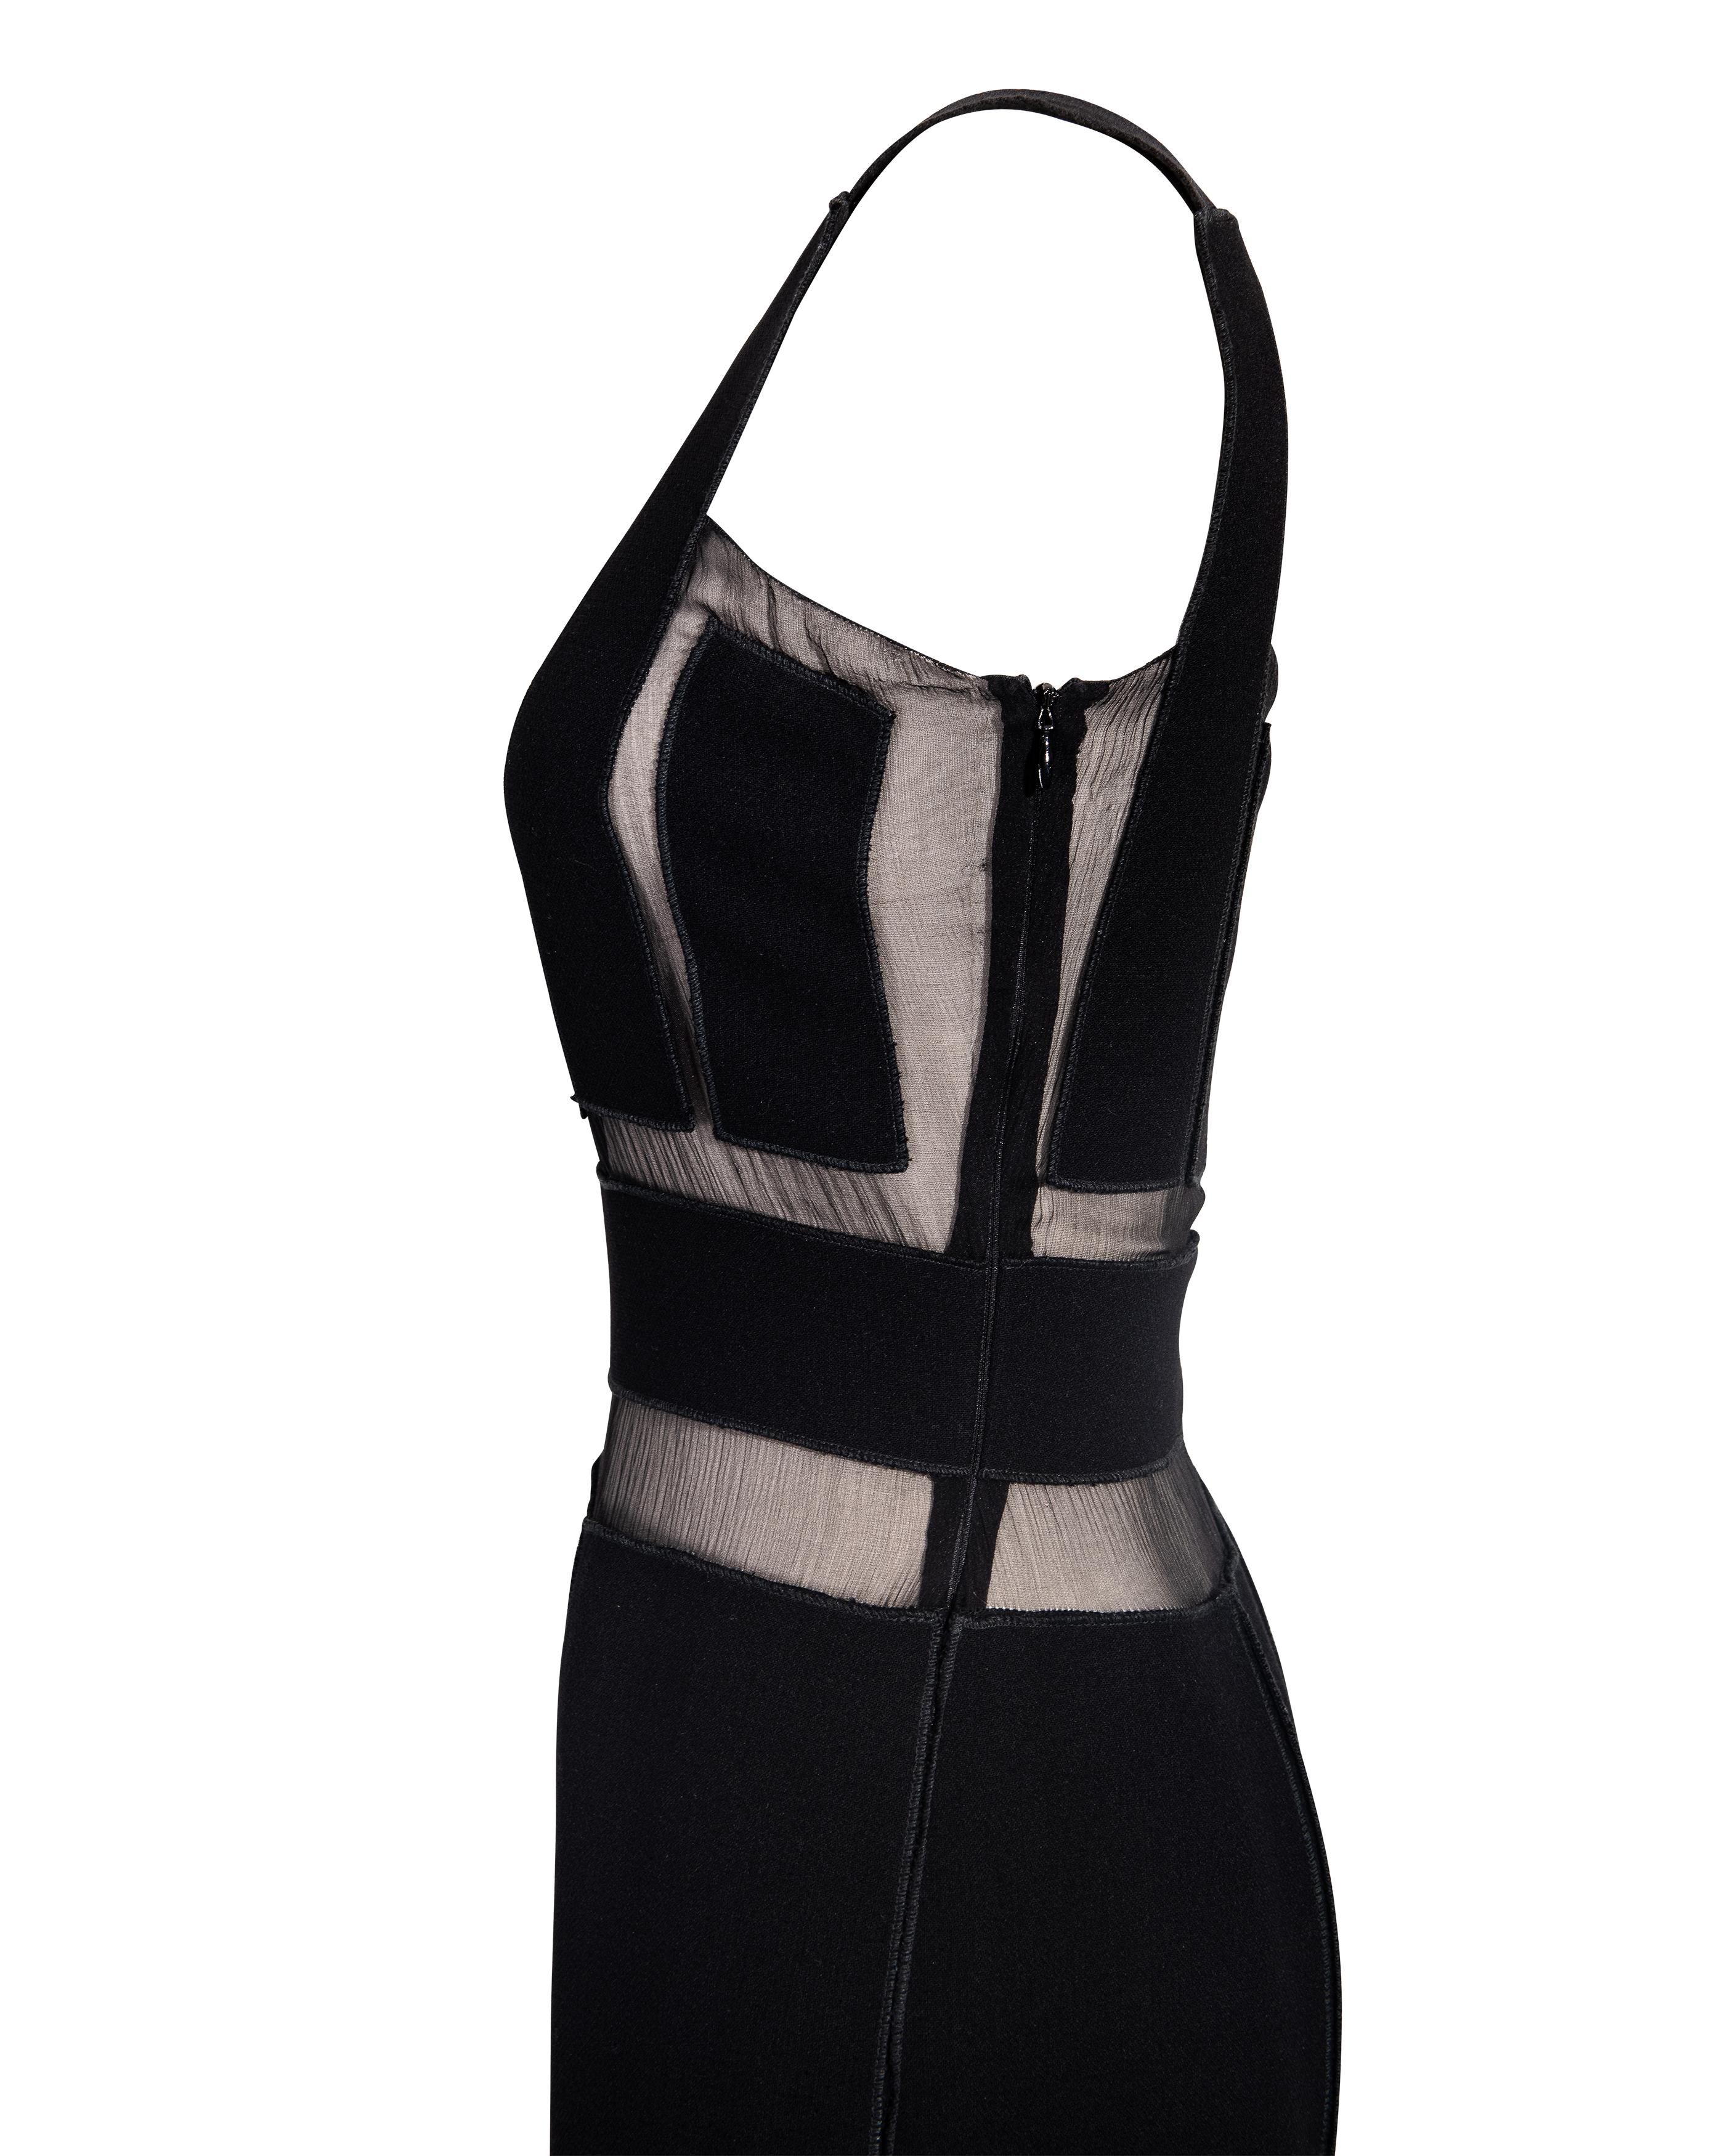 A/W 2001 Prada Black Dress with Semi-Sheer Silk Chiffon Paneling 4